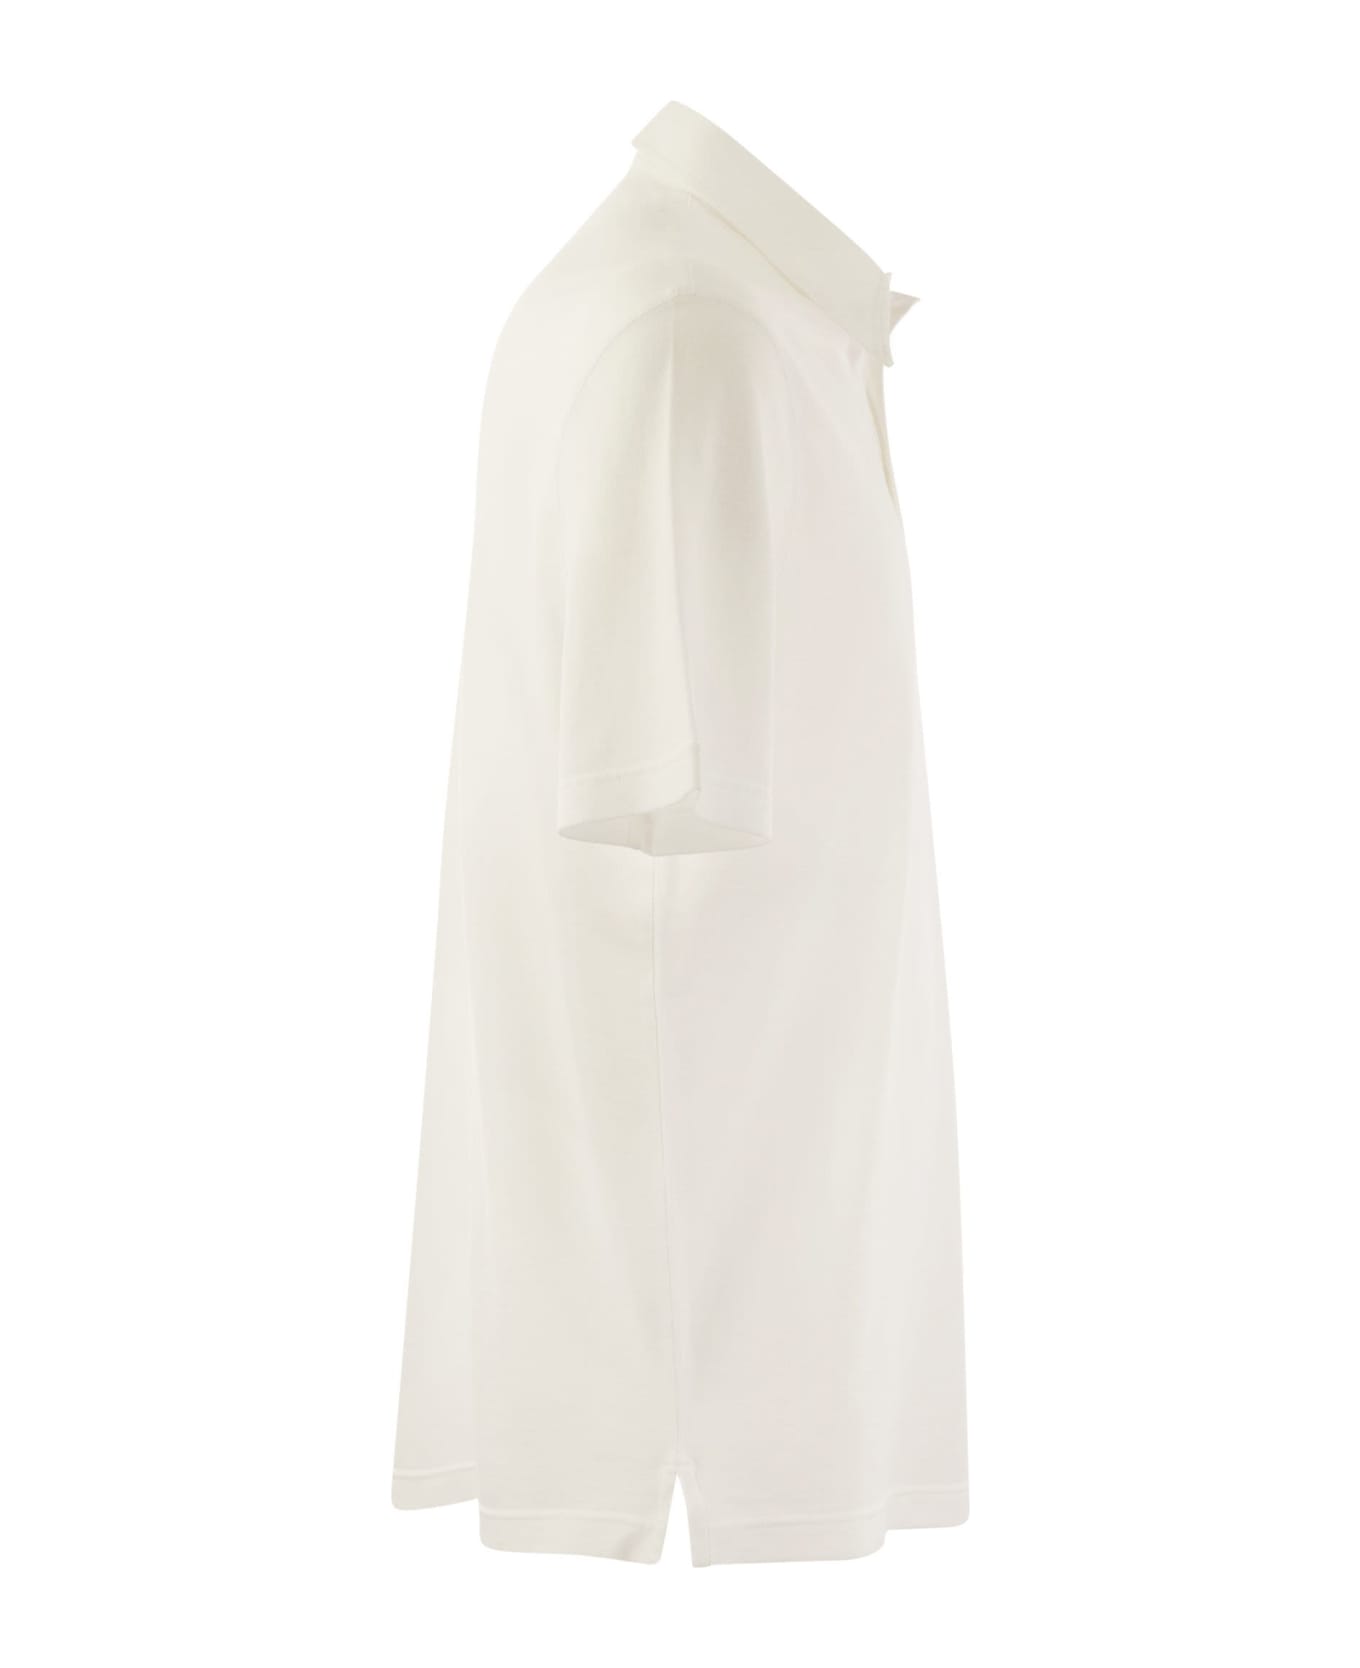 Fedeli Short-sleeved Cotton Polo Shirt - White ポロシャツ